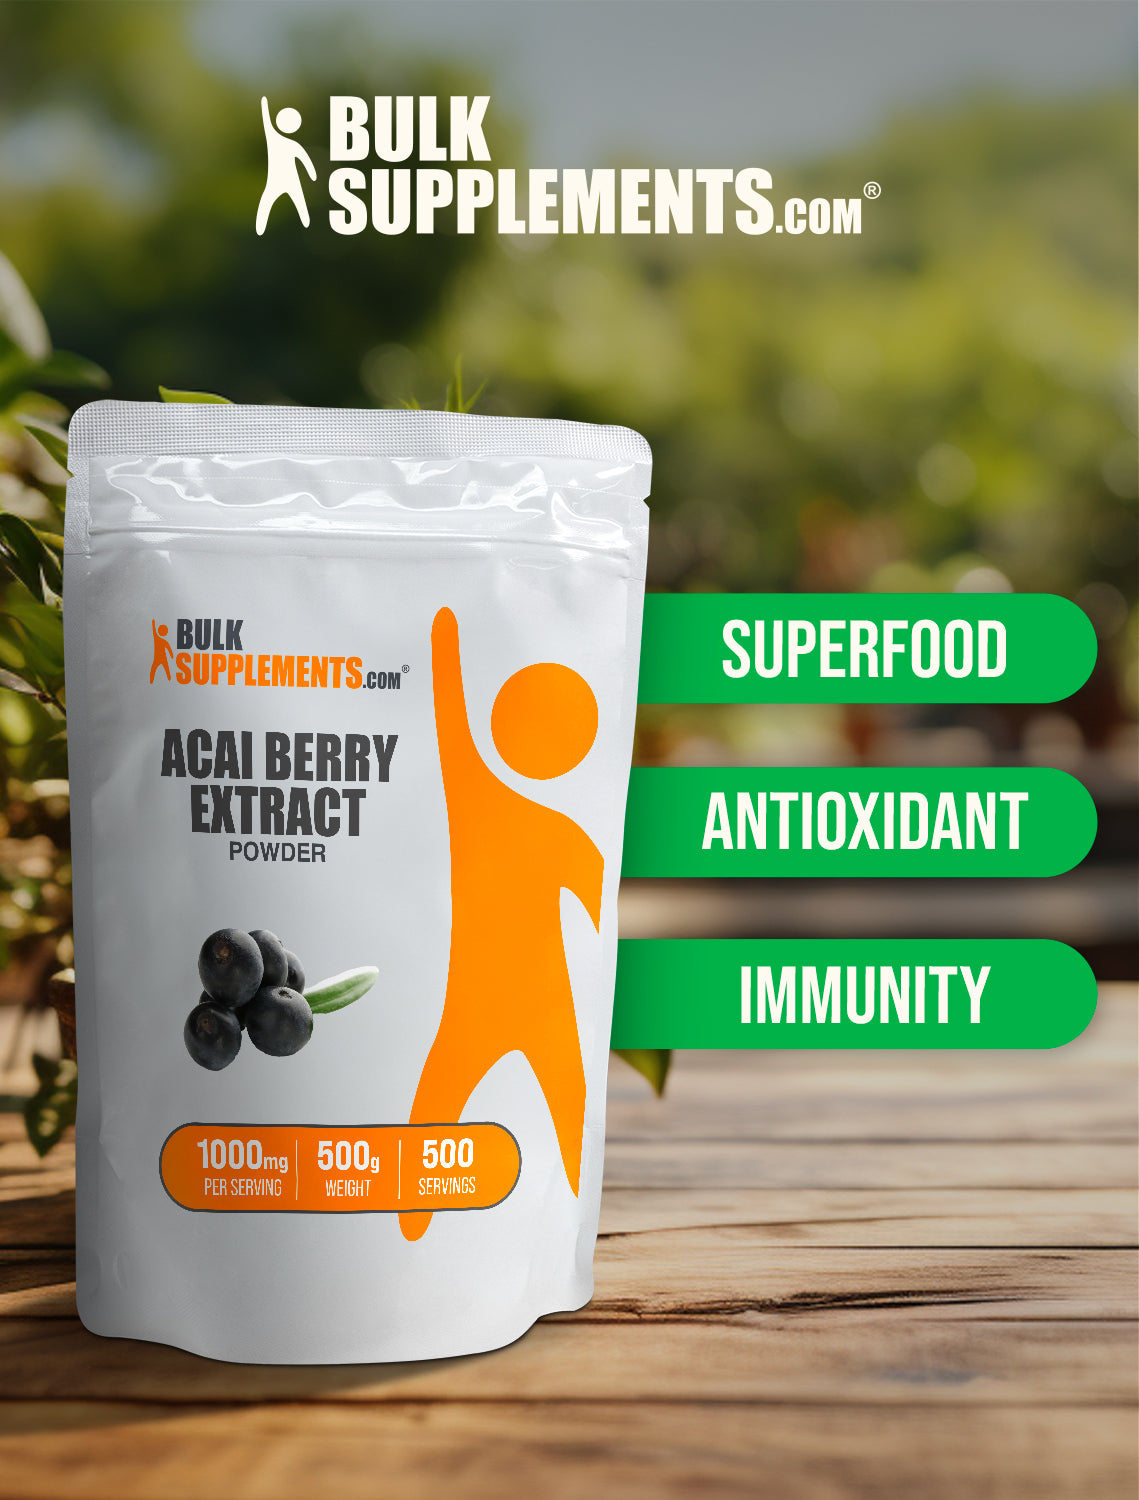 Acai Berry Extract powder keyword image 500g